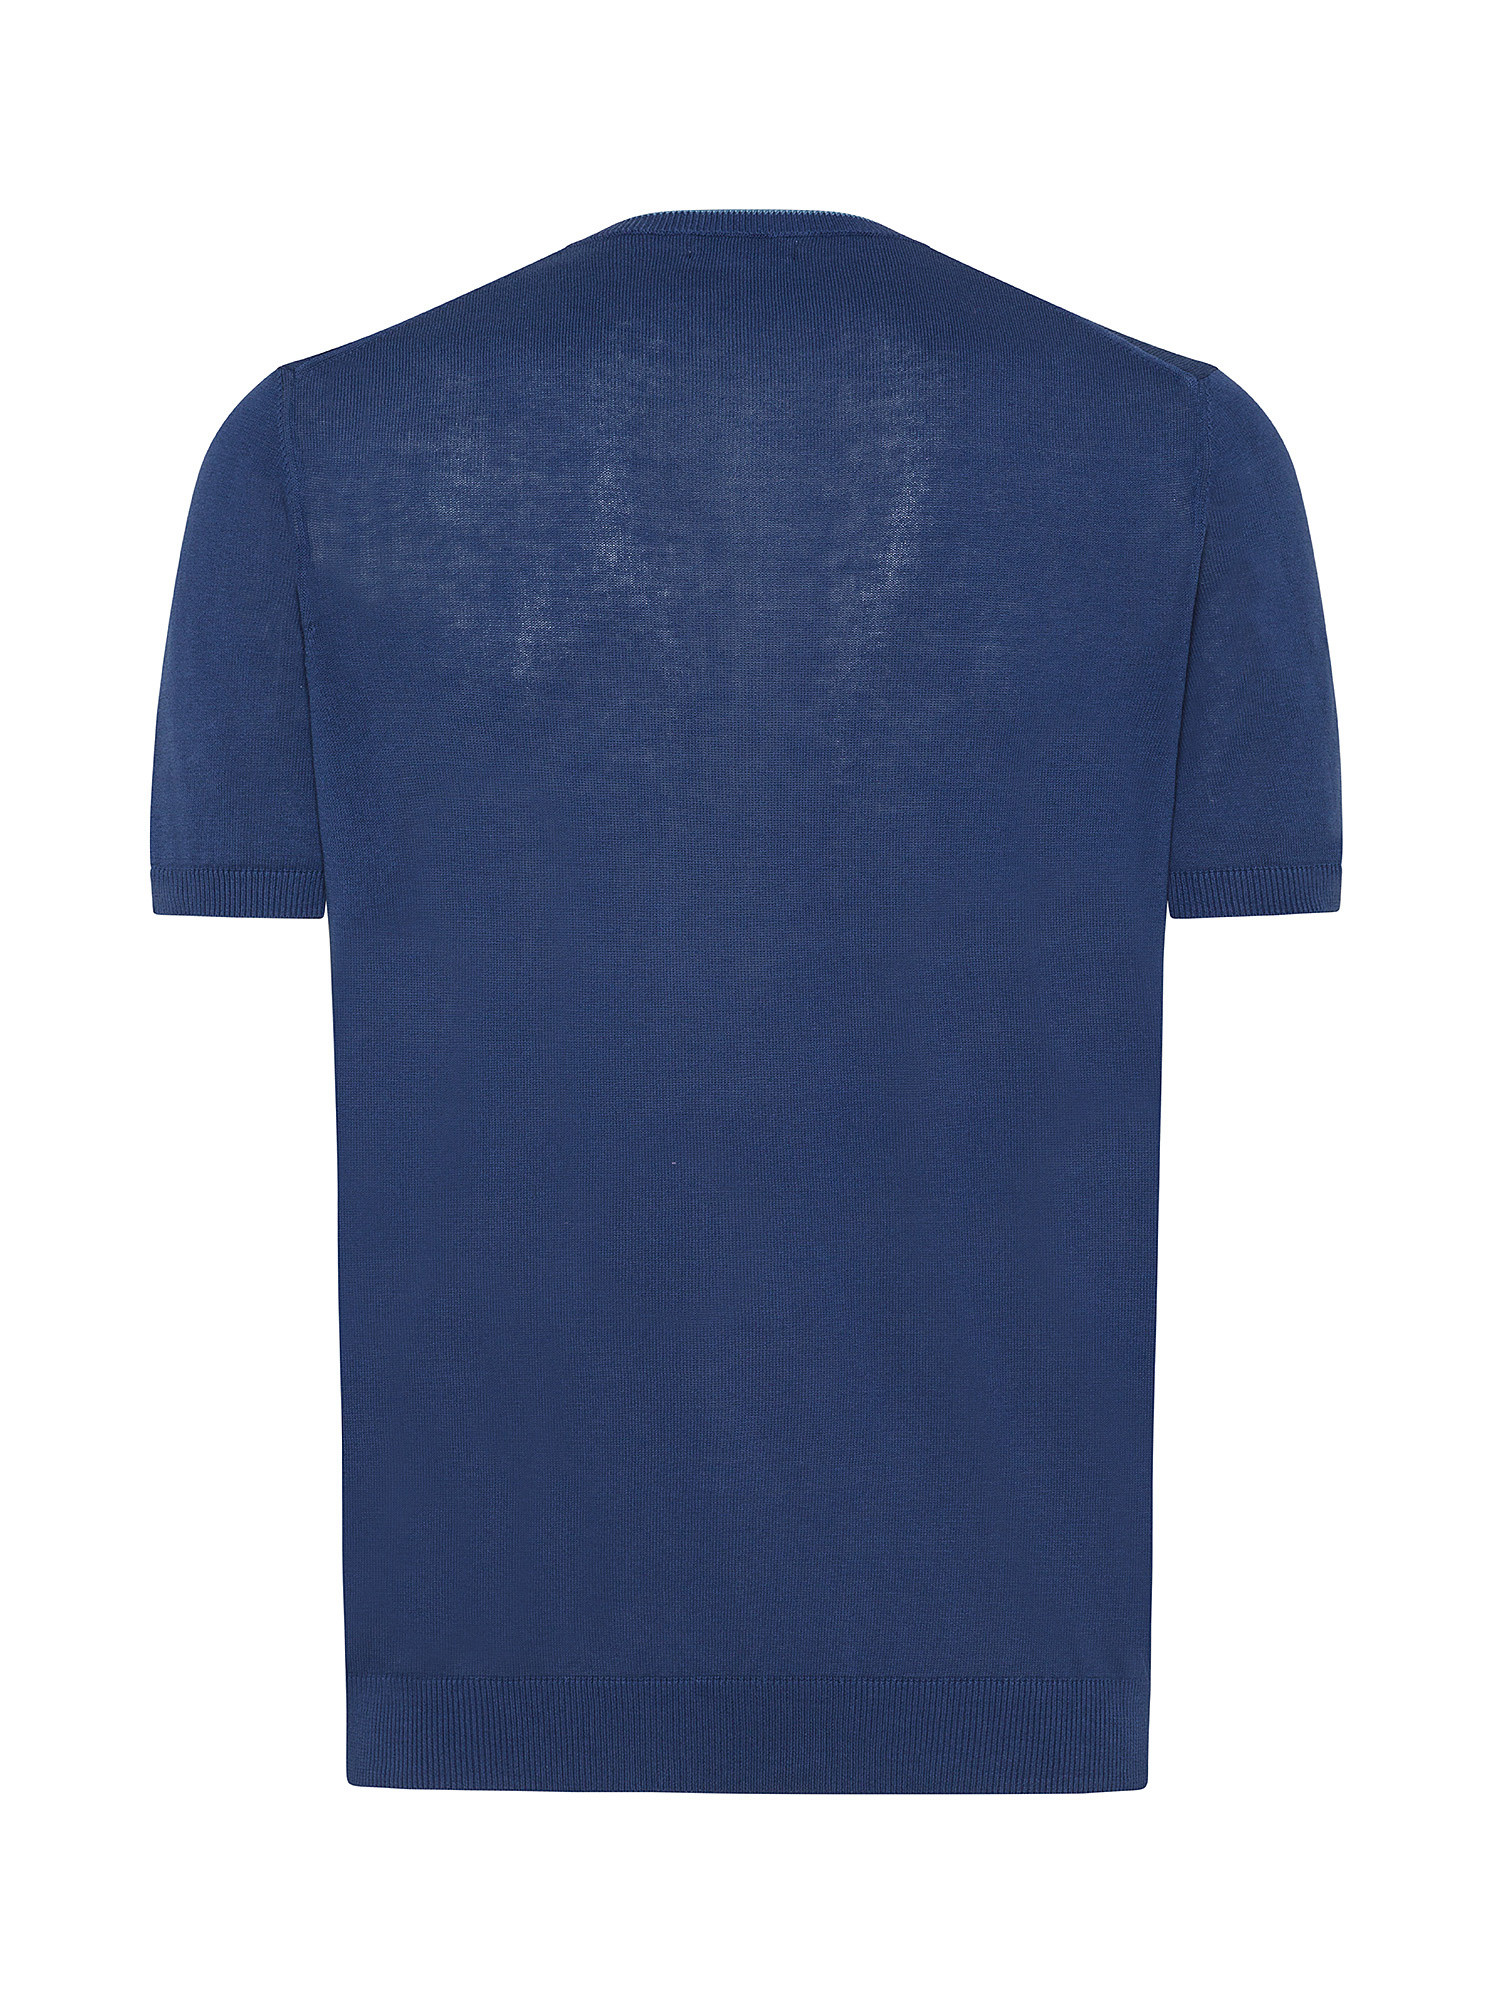 Luca D'Altieri - T-shirt in crepe di cotone, Azzurro, large image number 1